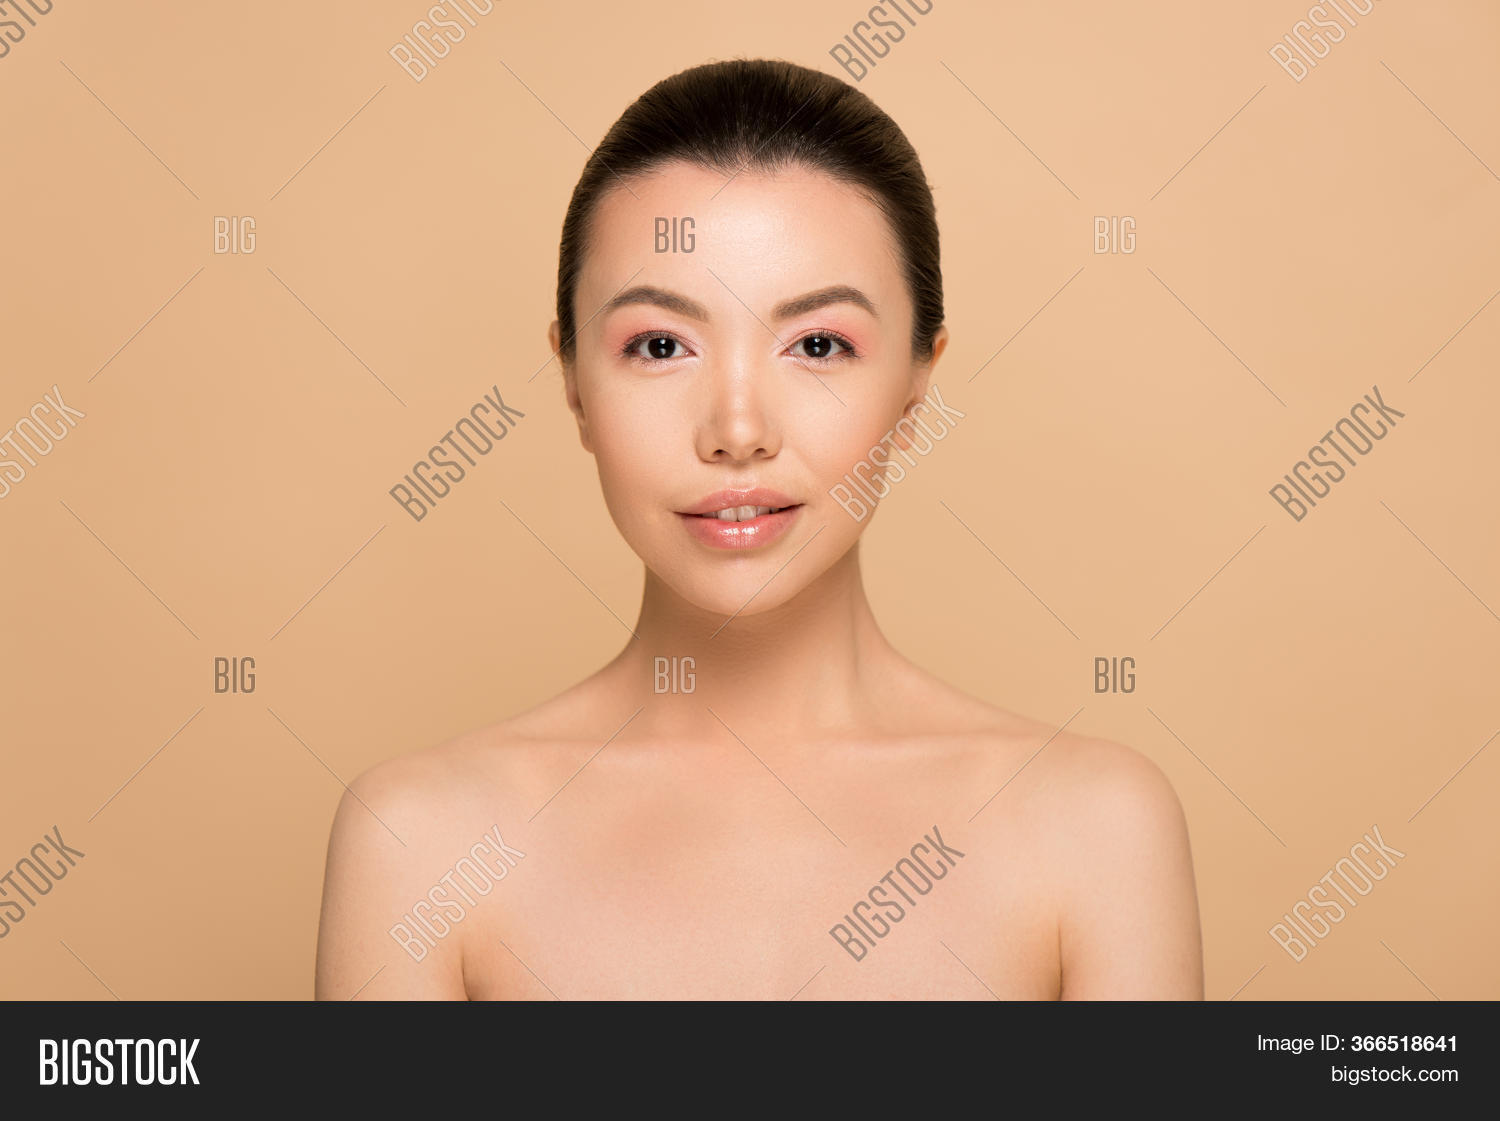 doug fritz recommends Beautiful Naked Asian Woman